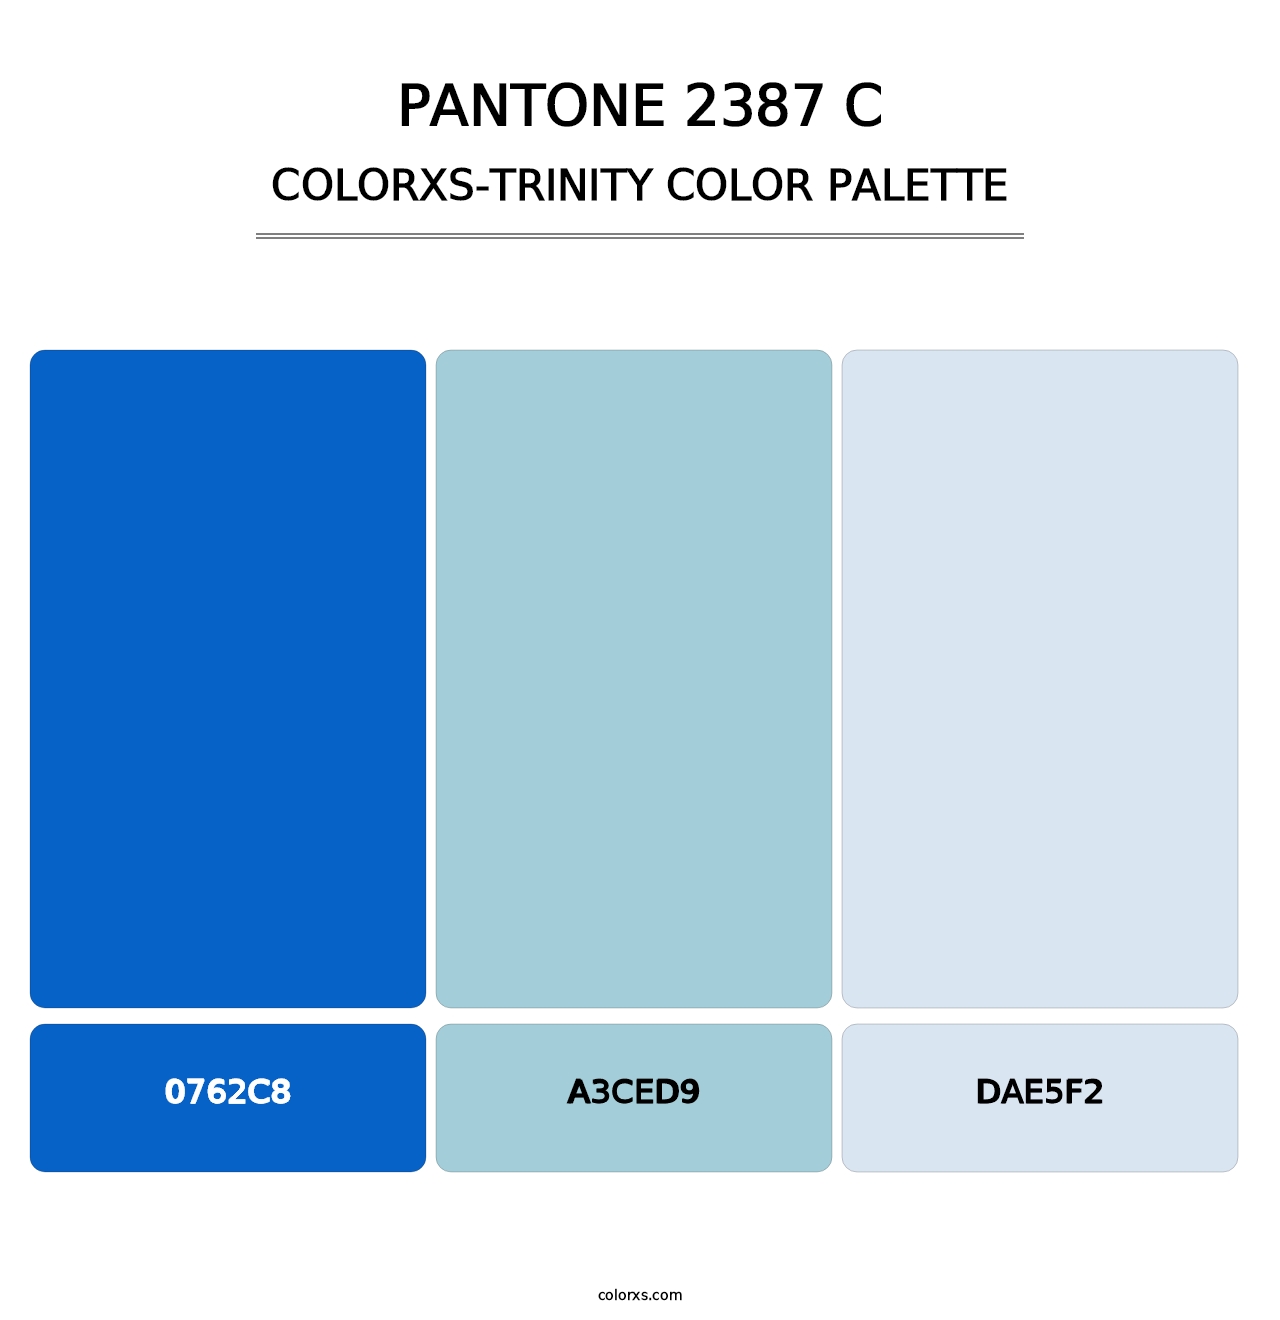 PANTONE 2387 C - Colorxs Trinity Palette